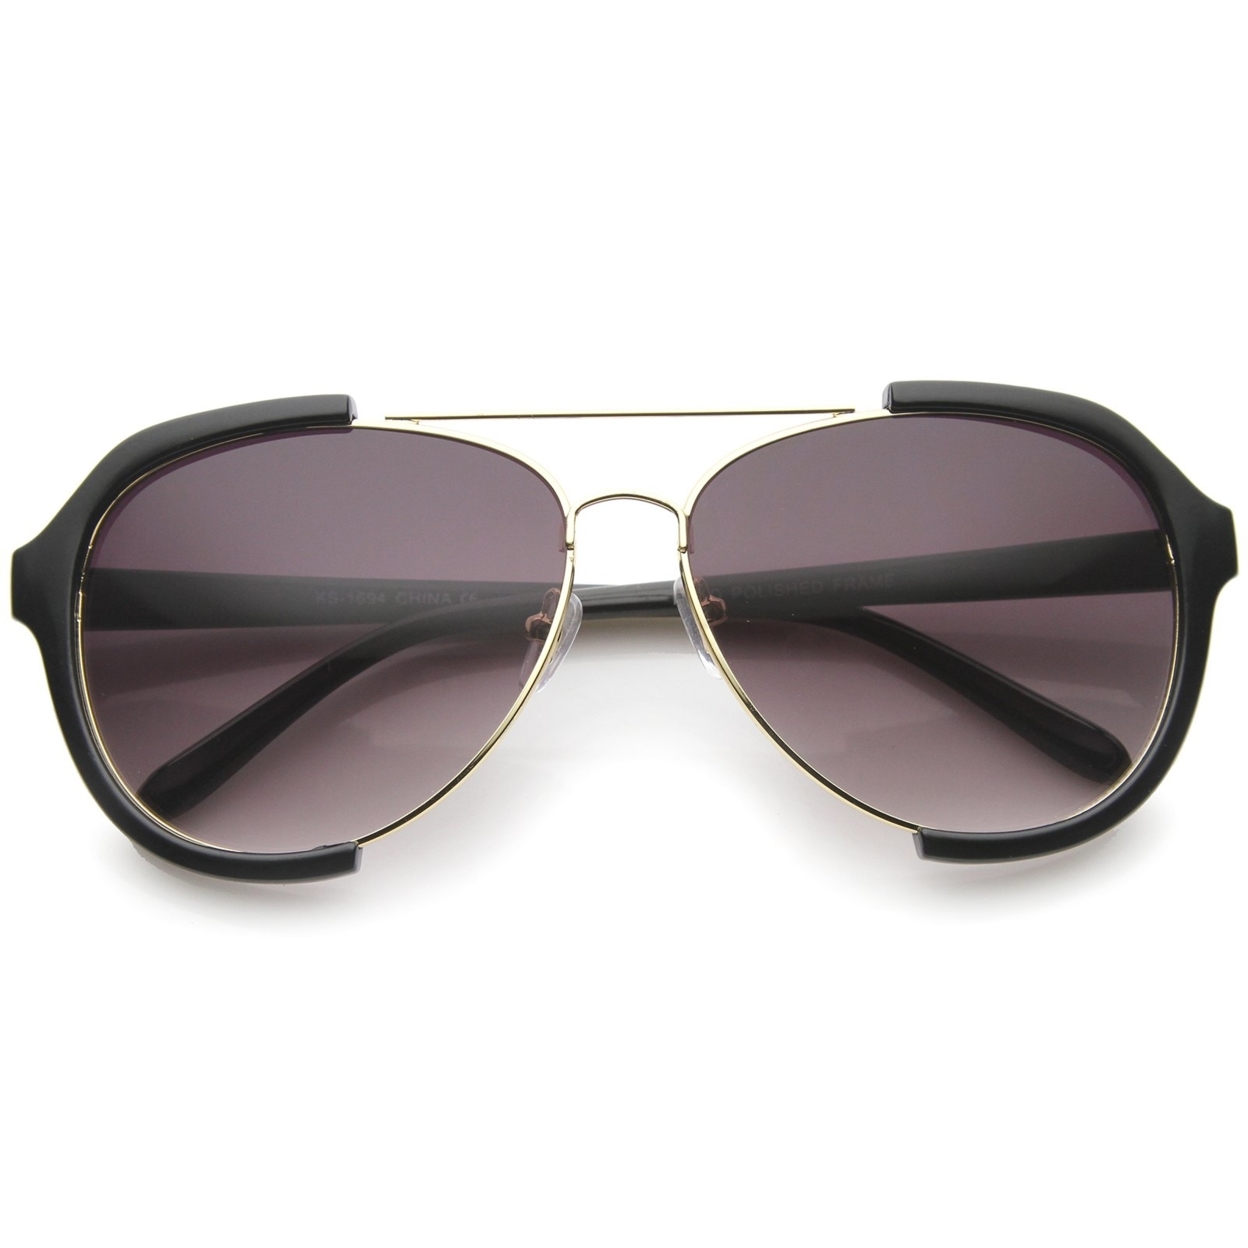 Modern Oversize Metal Crossbar Semi-Rimless Aviator Sunglasses 62mm - Black-Gold / Lavender